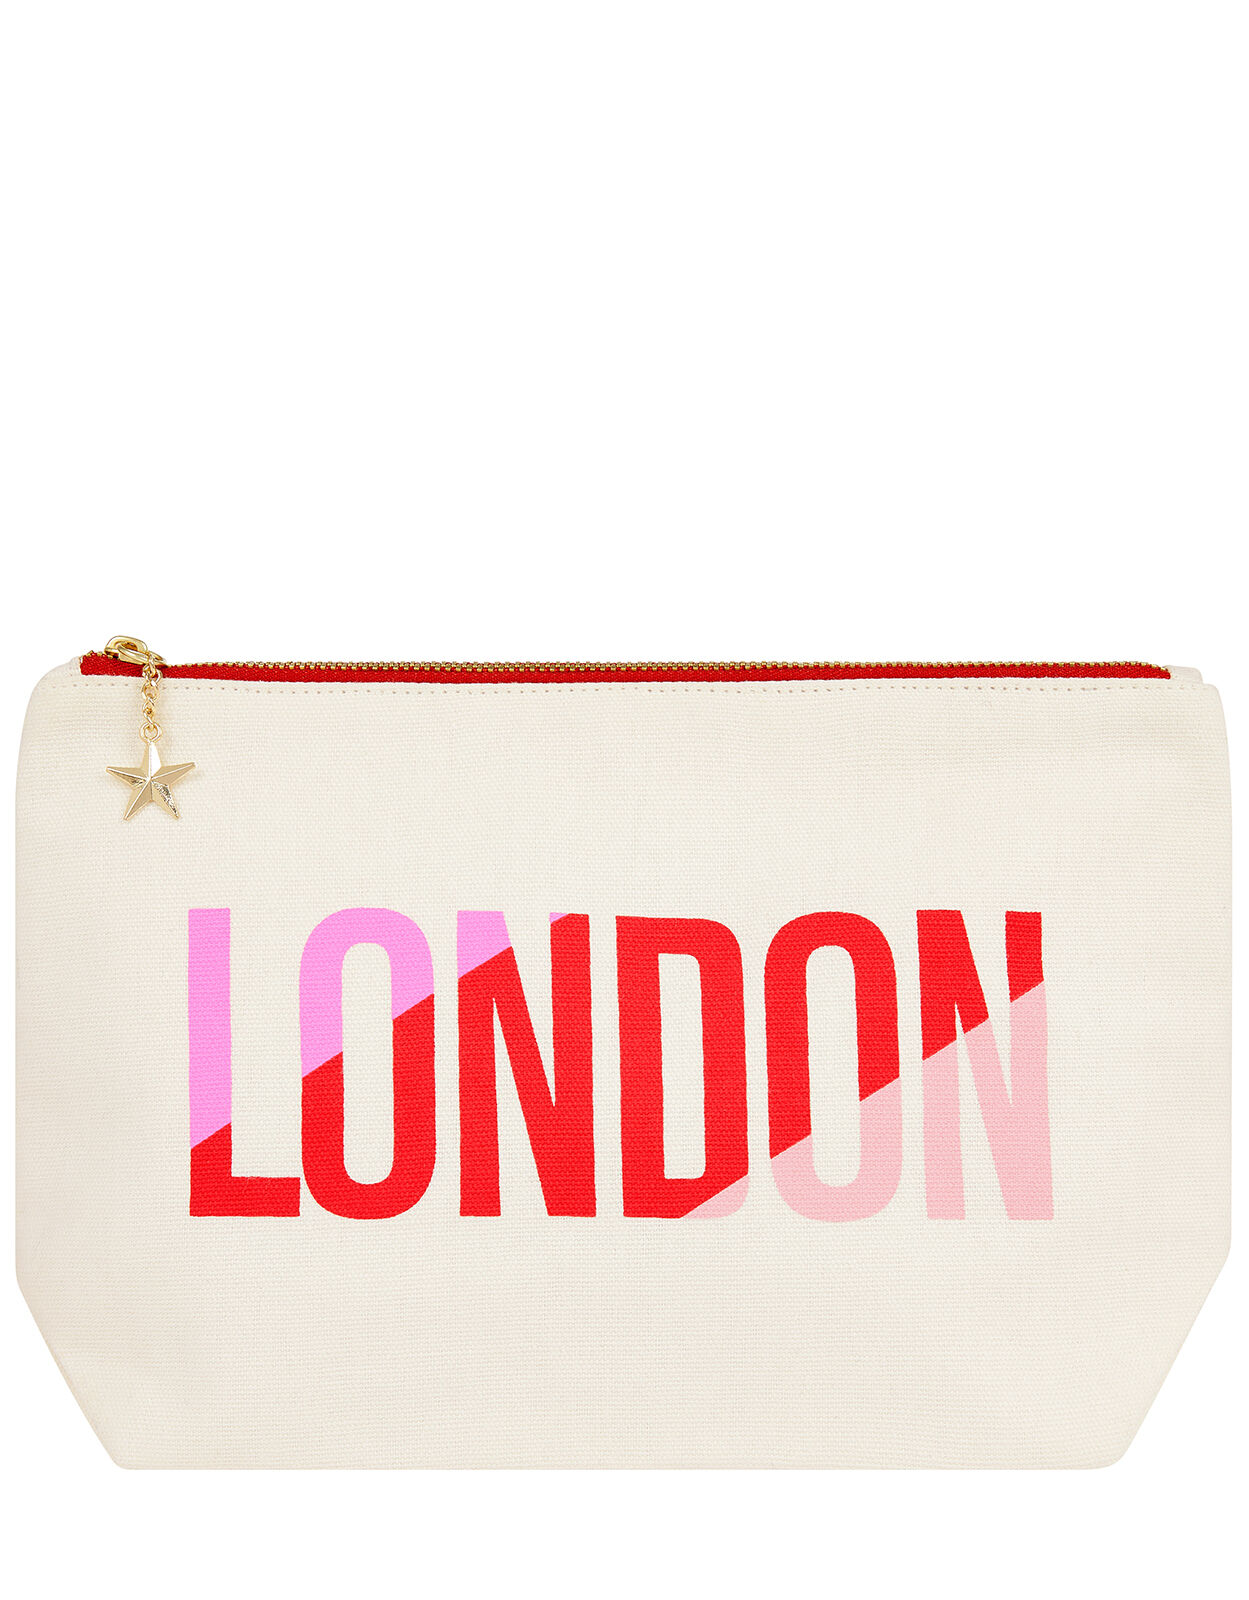 London Slogan Wash Bag | Handbags & Purses | Accessorize Global